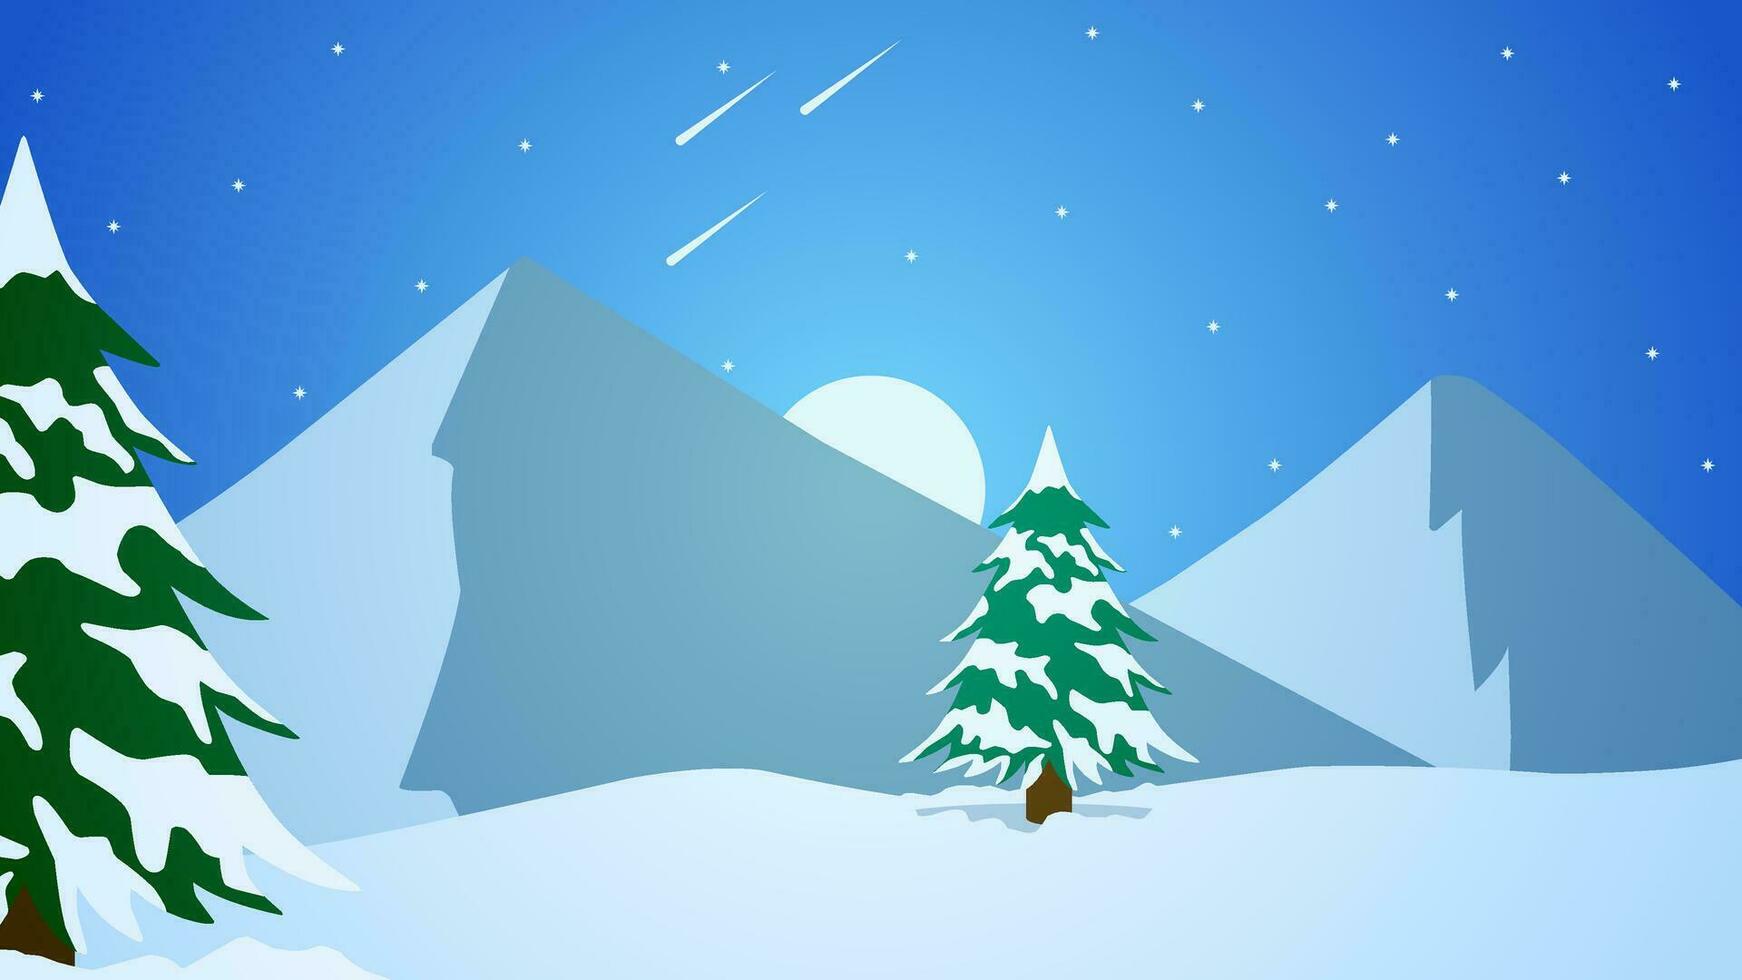 Nevado montaña paisaje vector ilustración. paisaje de nieve cubierto montaña en invierno estación. invierno montaña panorama para ilustración, antecedentes o fondo de pantalla